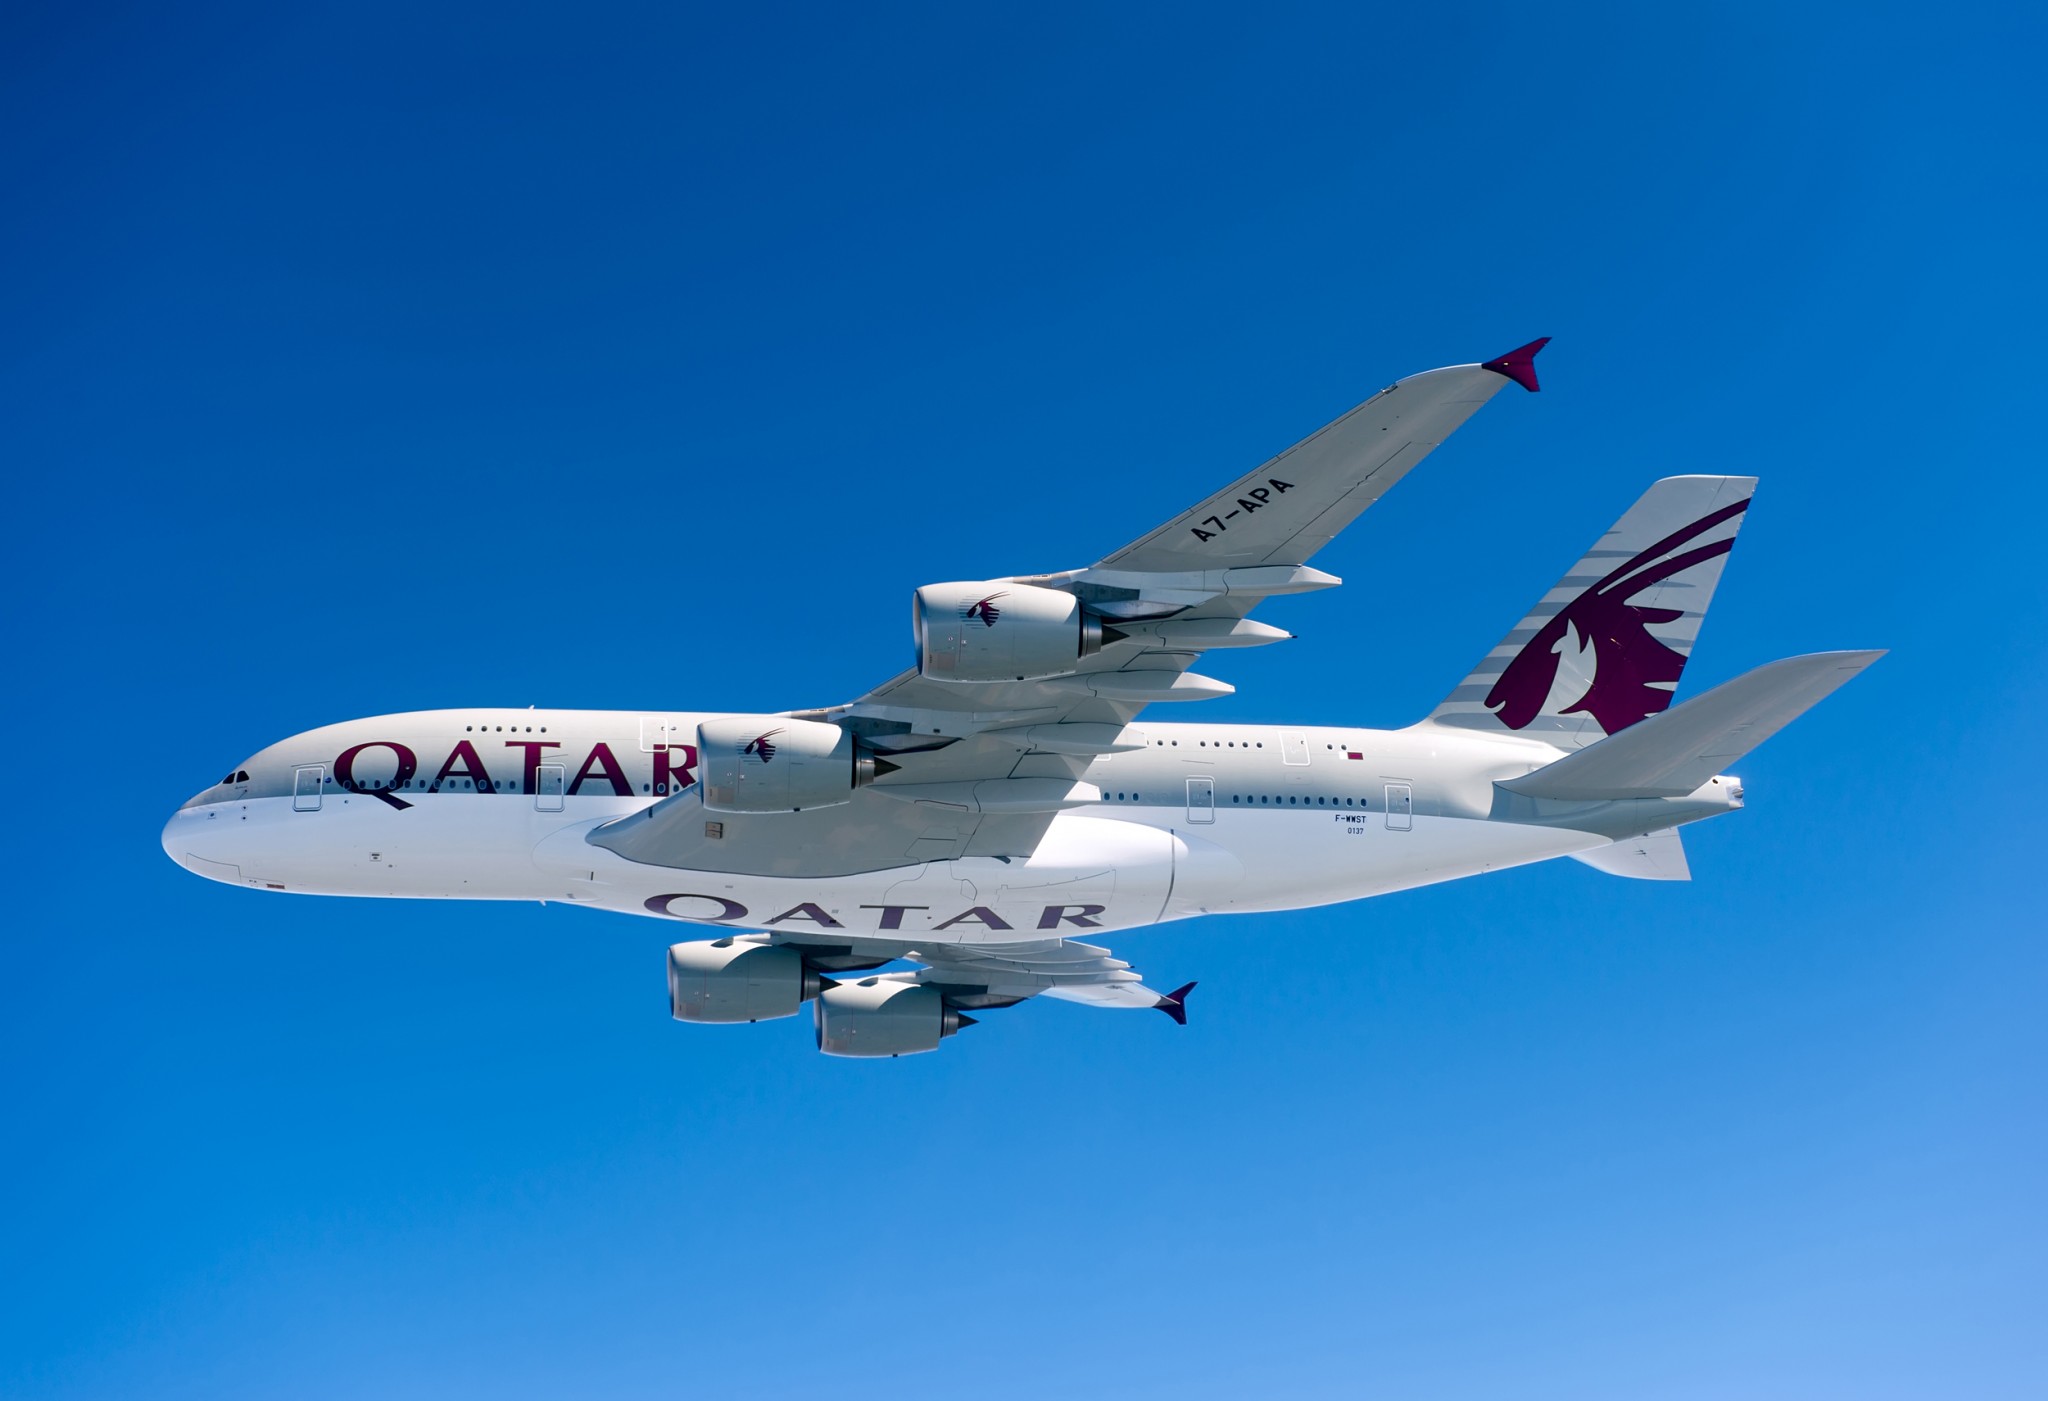 Qatar Airways reintroduces the A380 to Perth, Australia